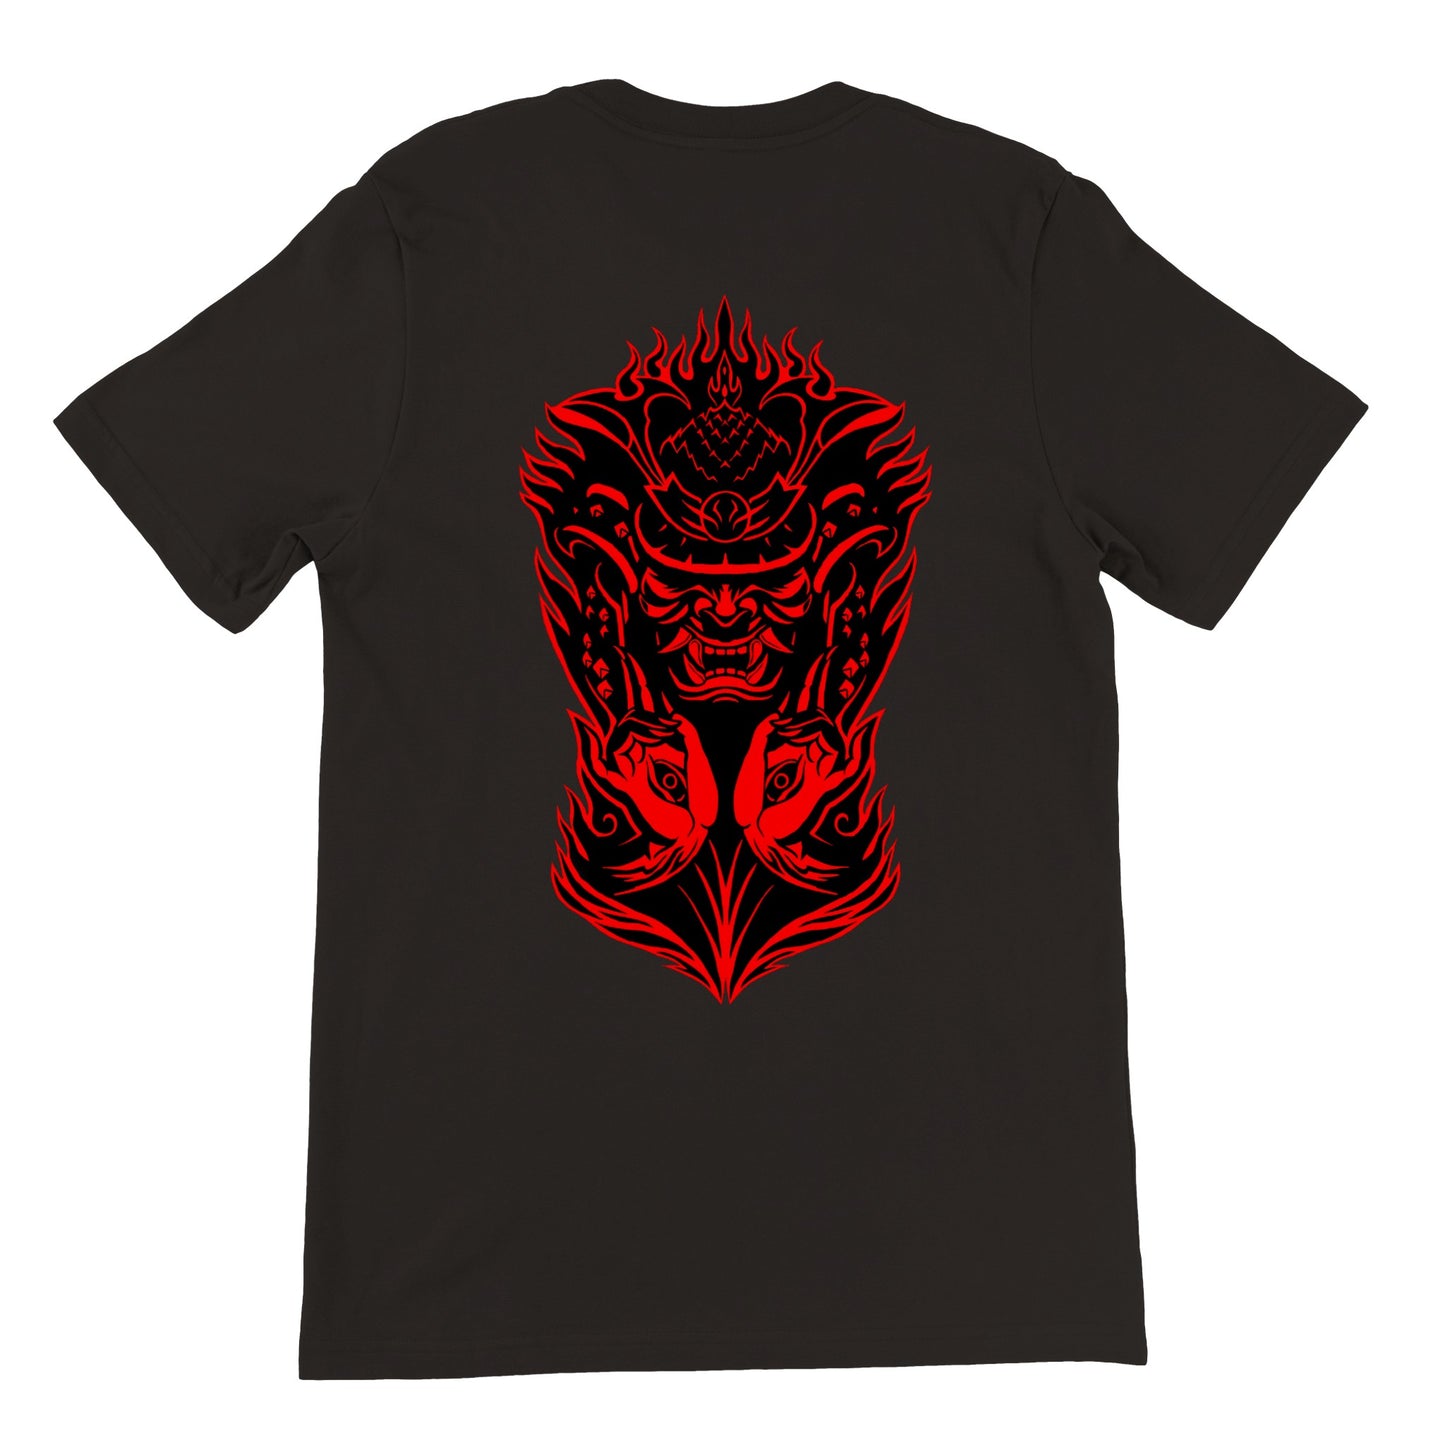 KURO SHADOWS "Red Samurai" Premium Unisex Crewneck T-shirt